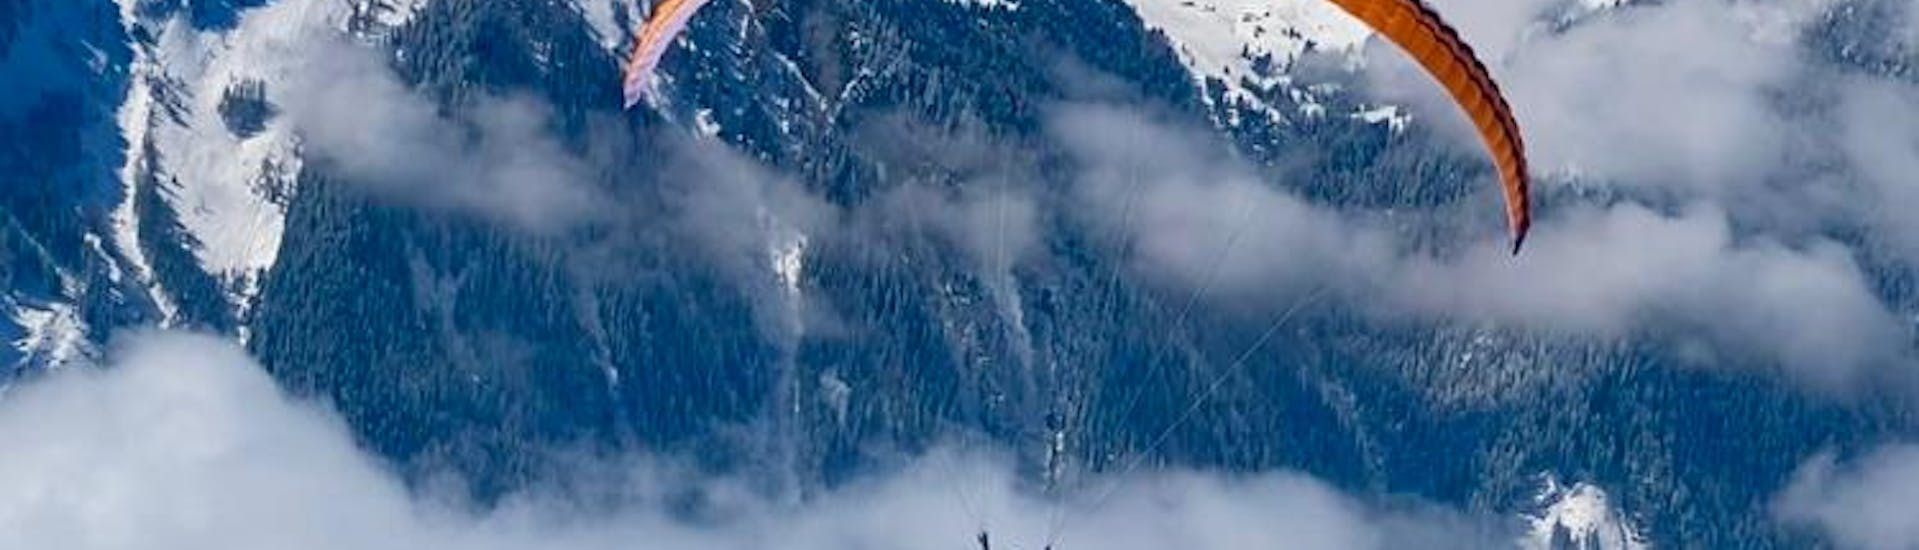 Parapente biplaza a gran altitud en Mayrhofen - Innsbruck.